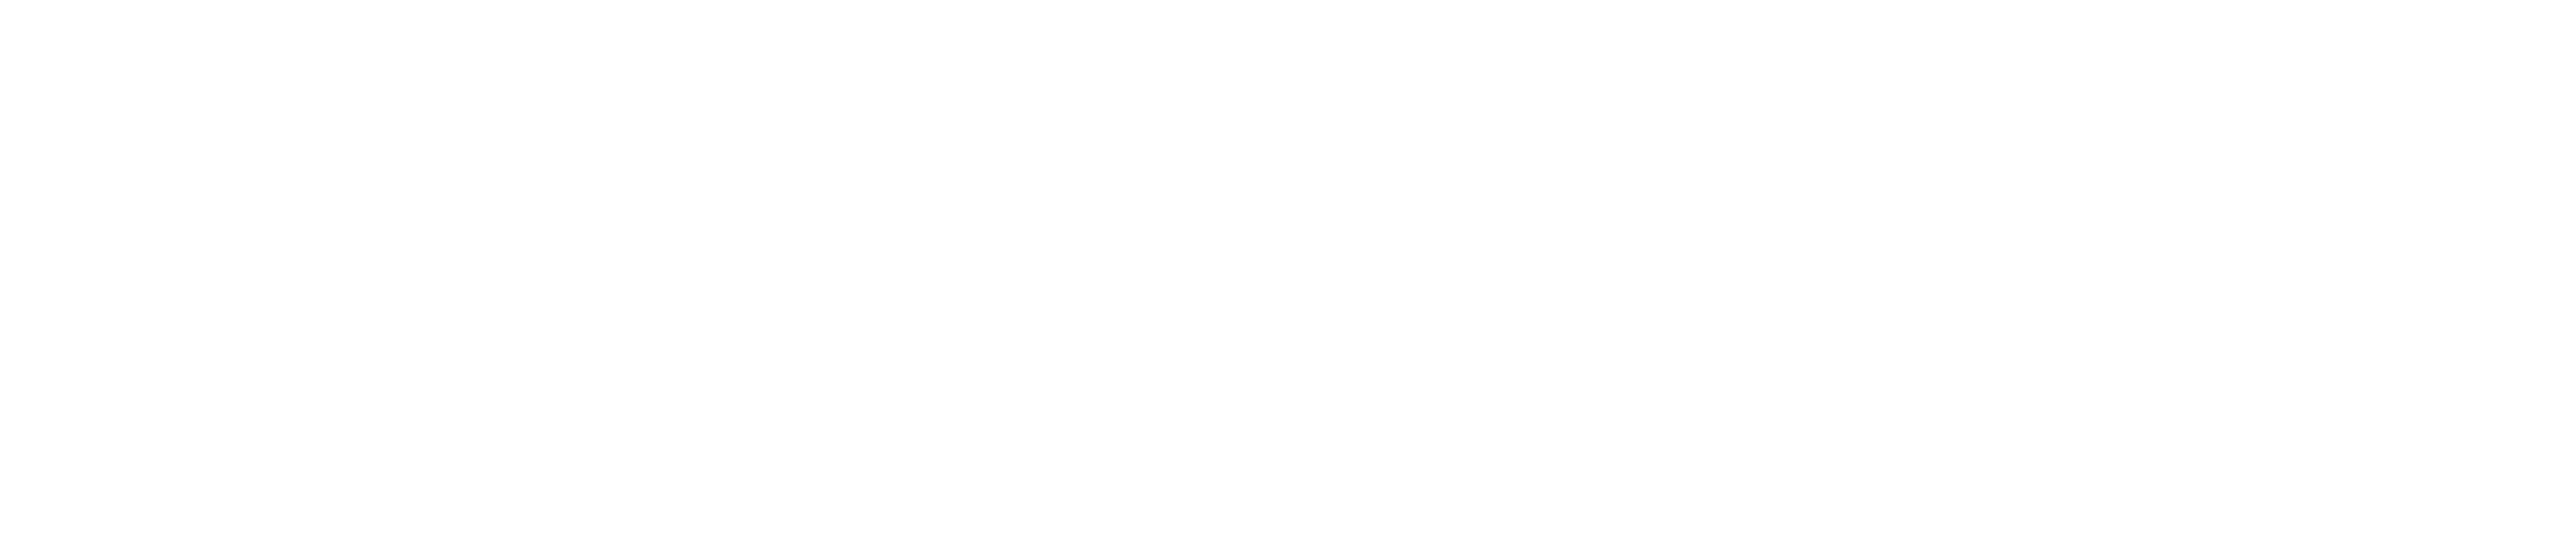 eXp World Holdings Inc logo